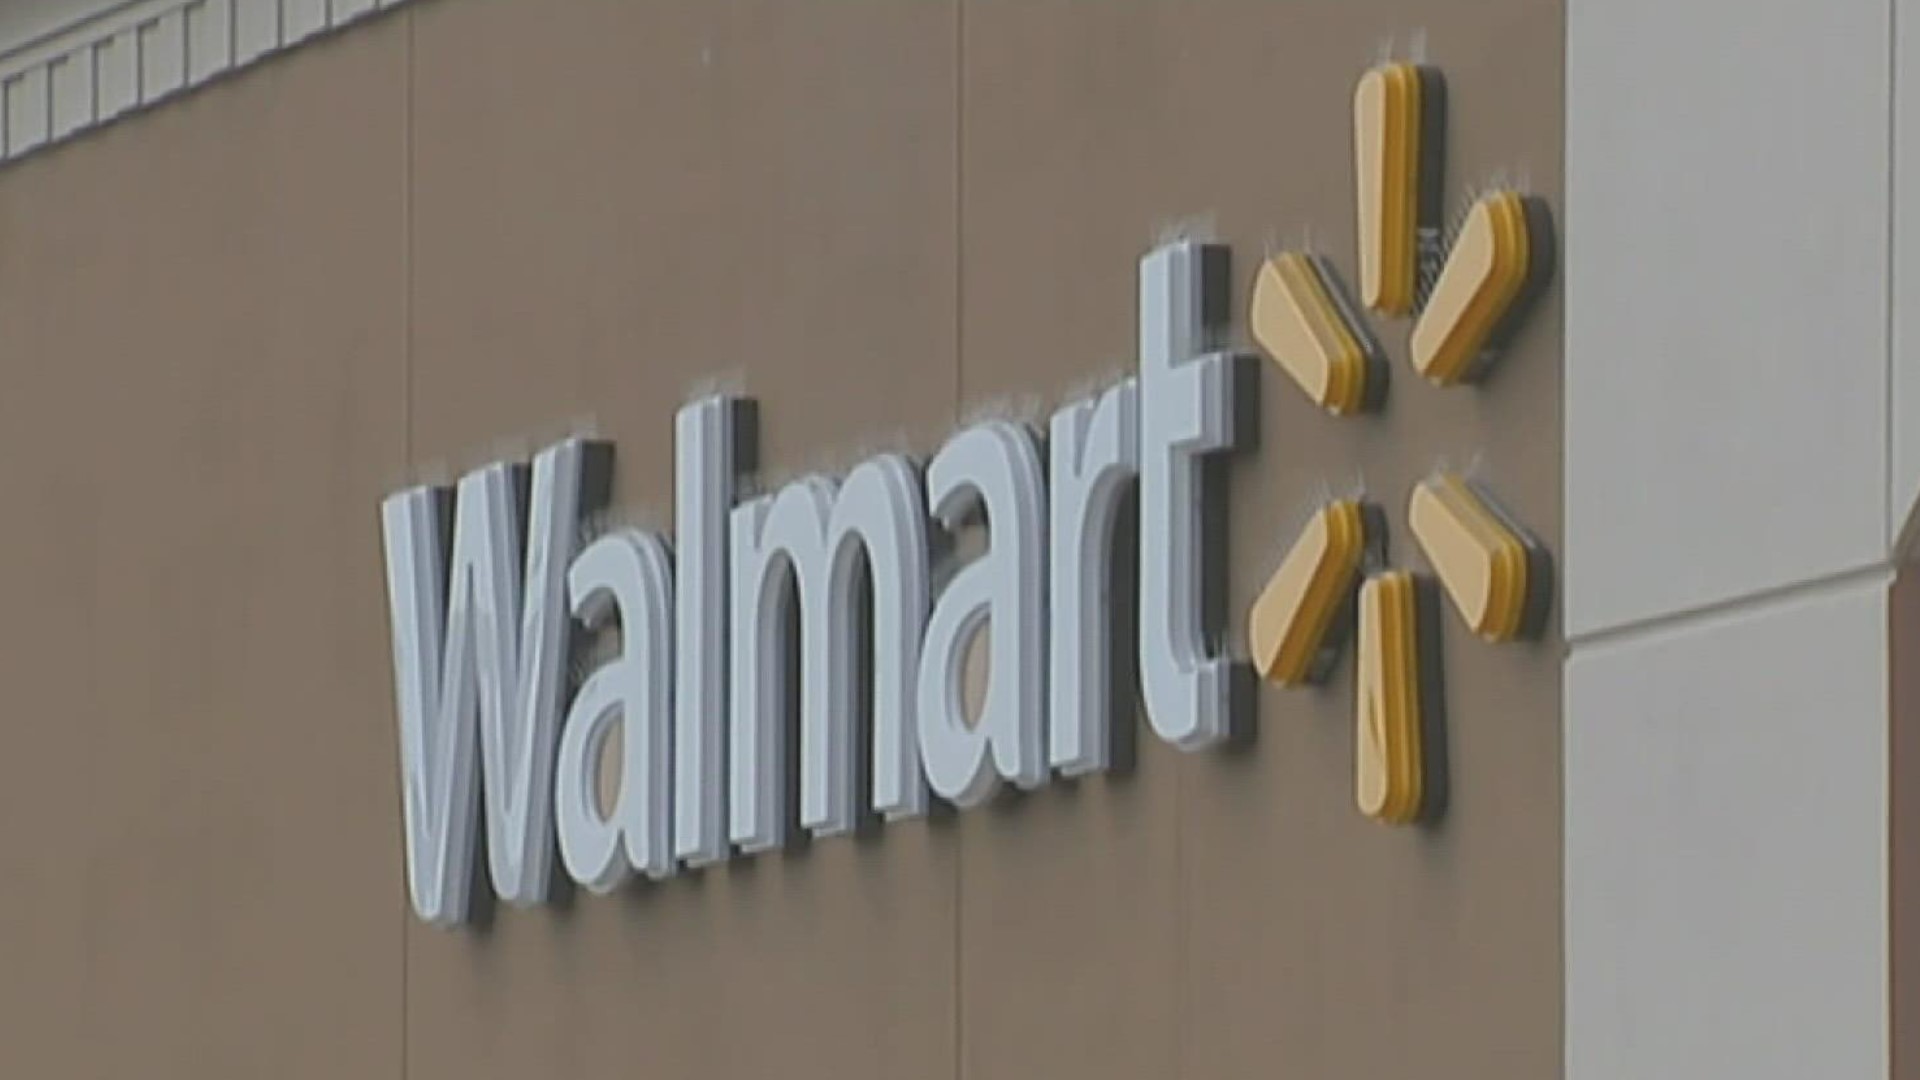 Walmart employs nearly 1.6 million people in the U.S.